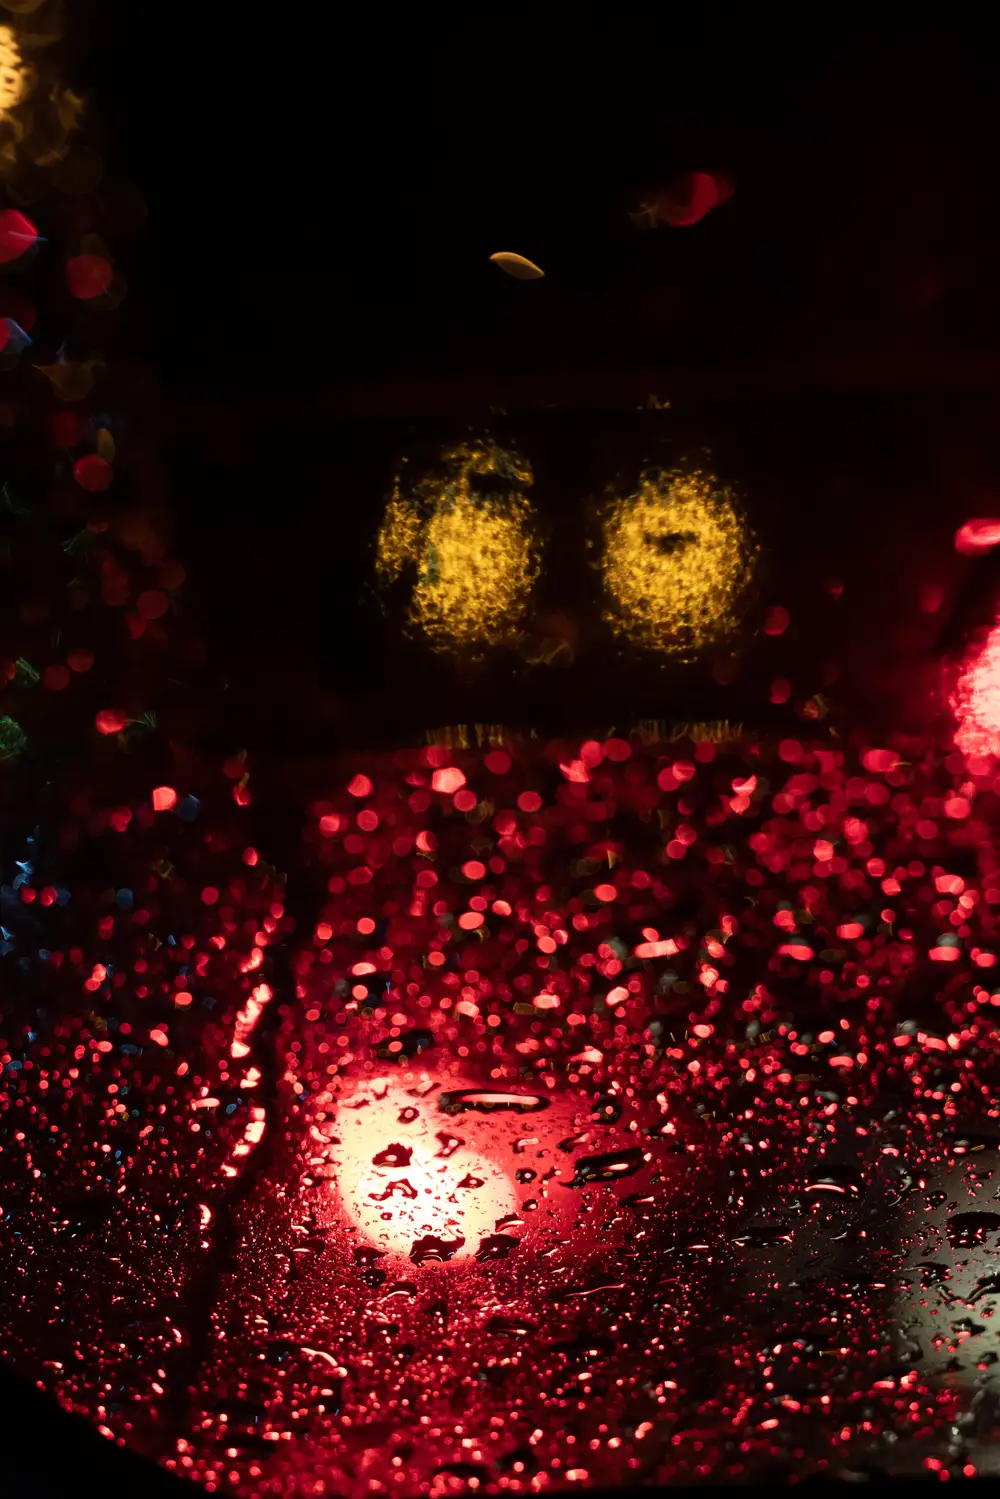 Car Light reflections on raindrops